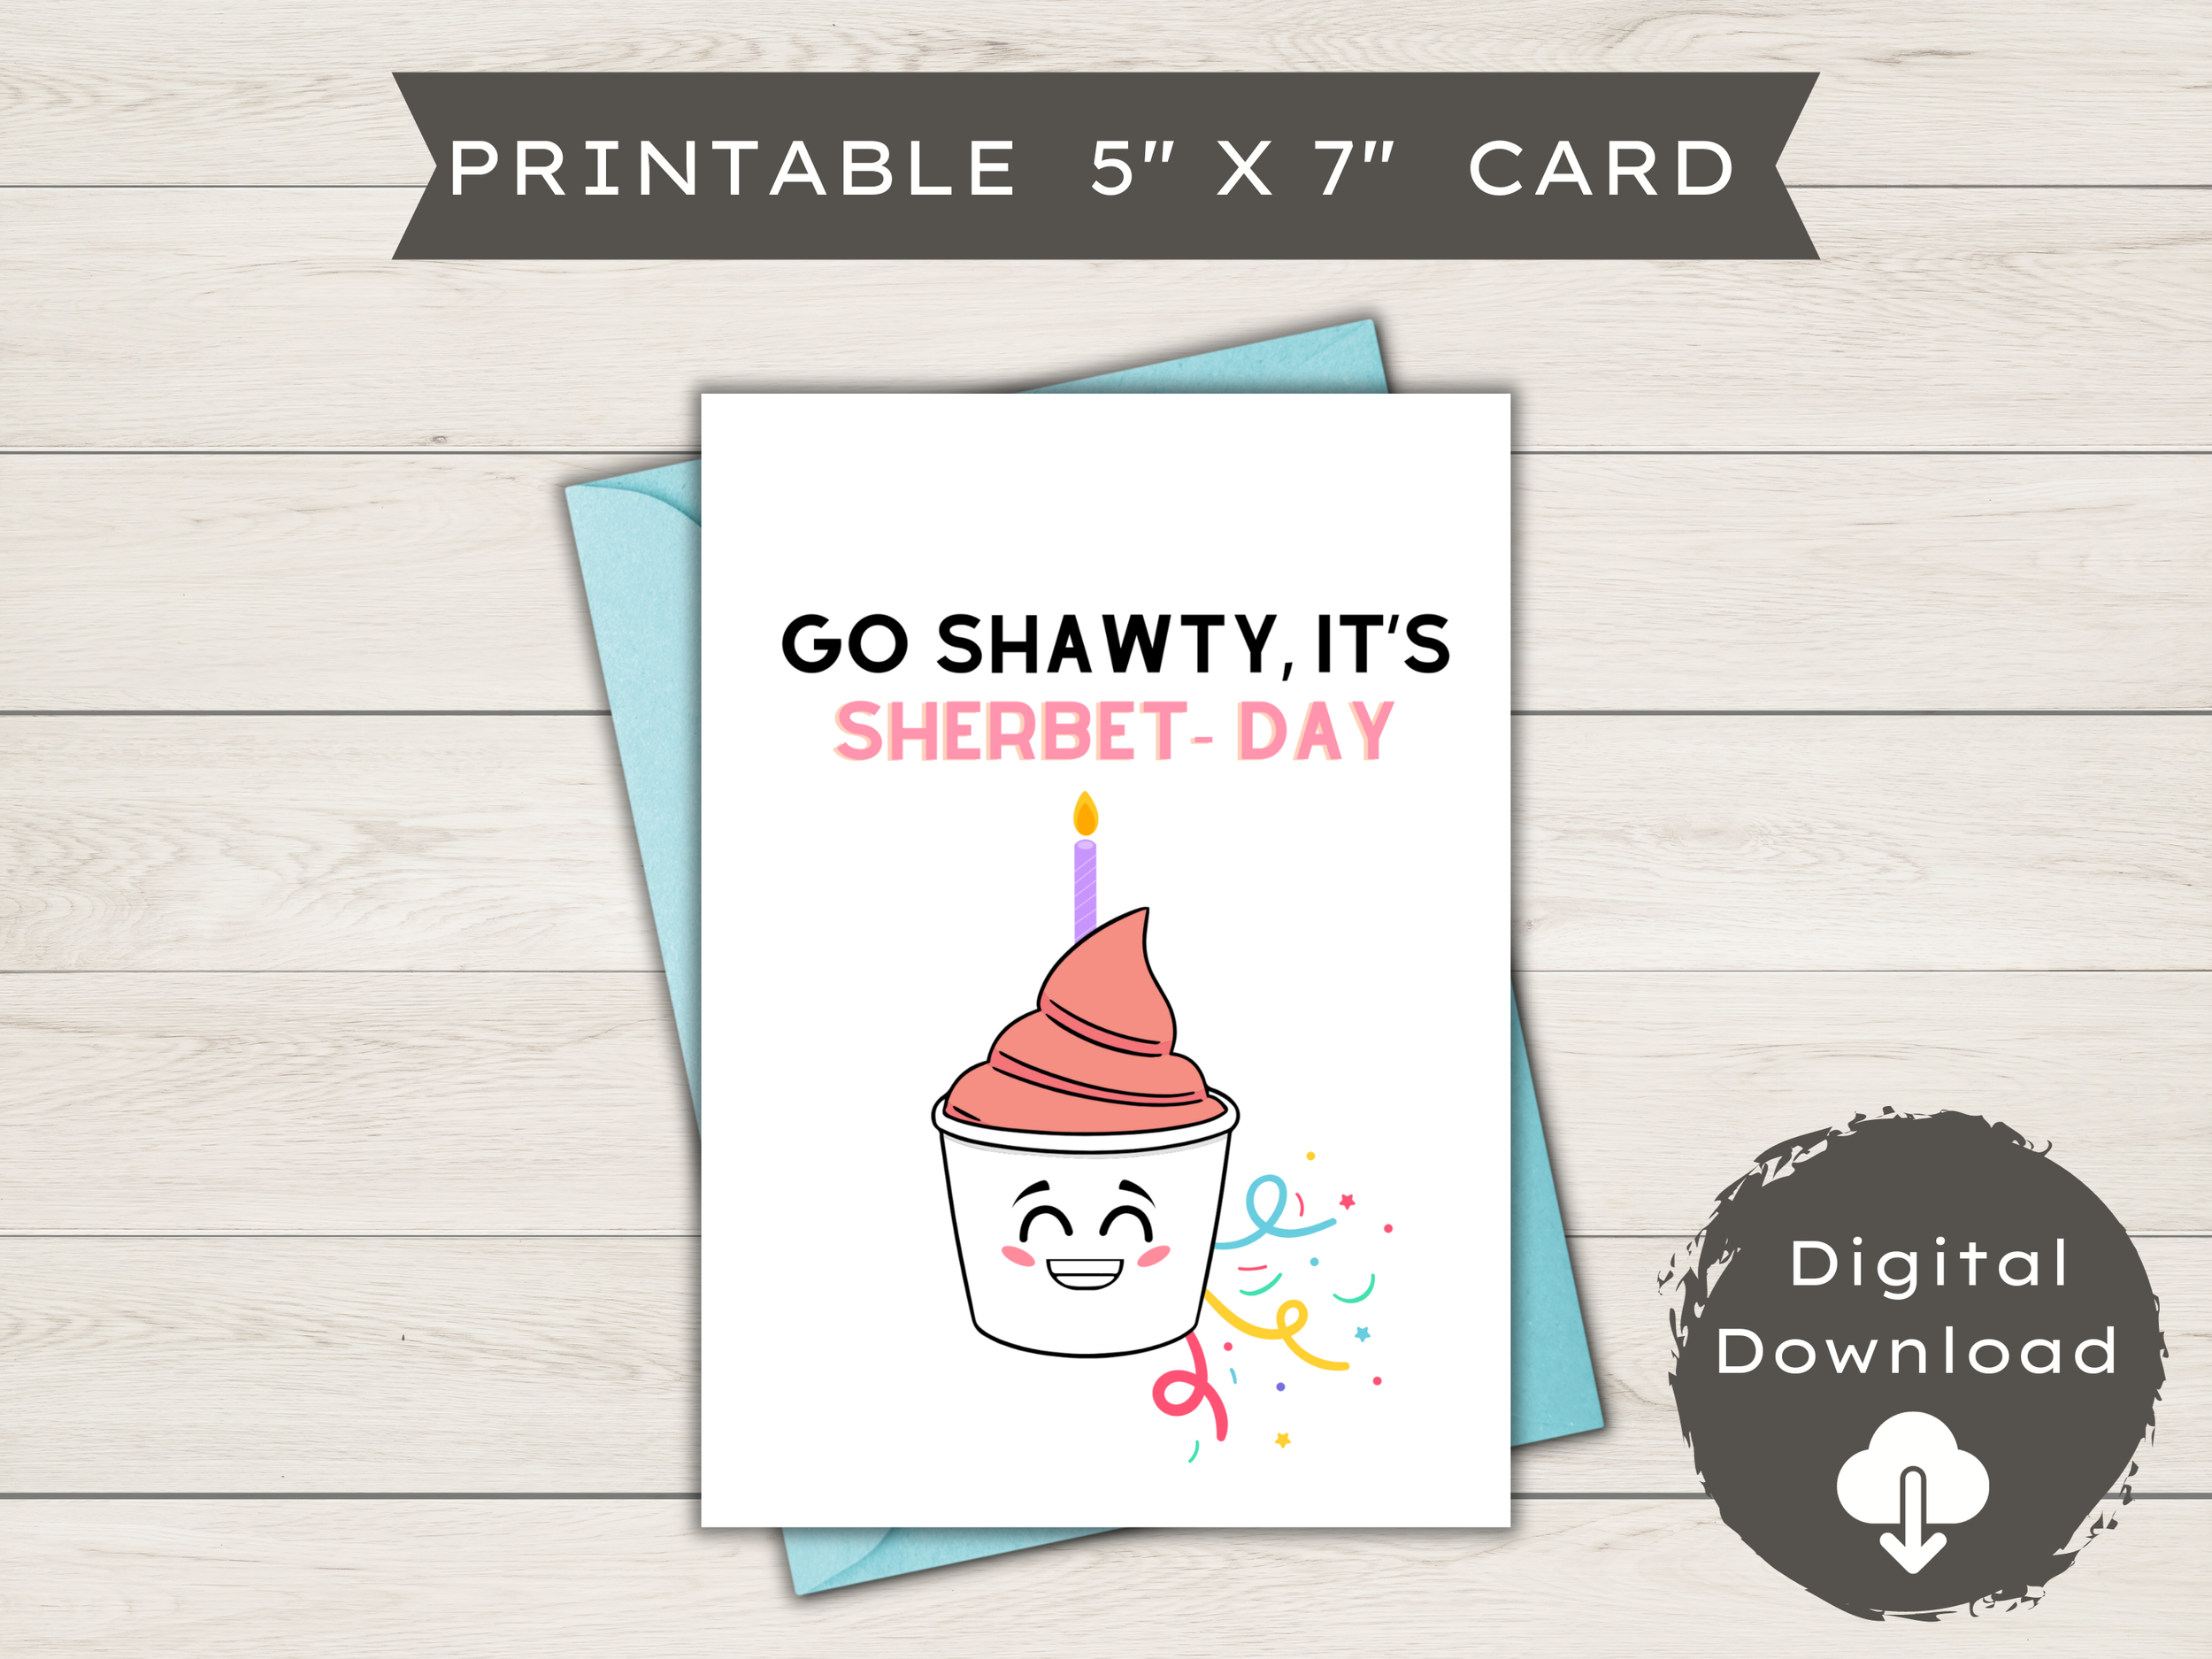 Printable Birthday Card - Go Shawty it's Sherbet-day